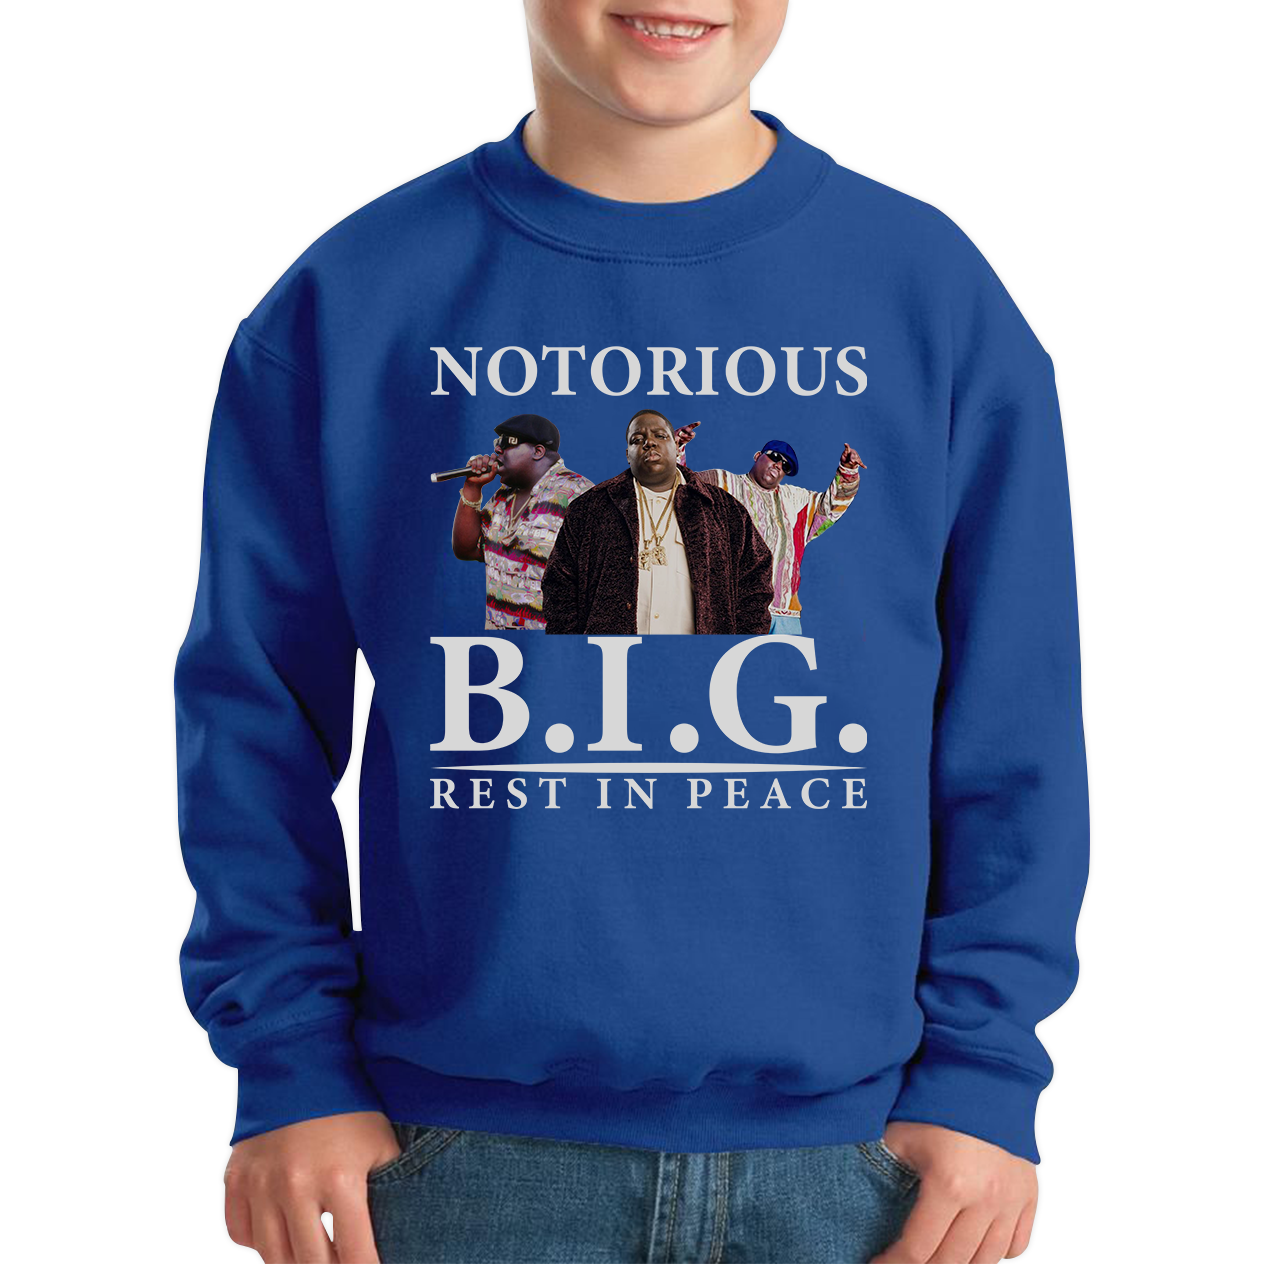 The Notorious B.I.G. American Rapper Jumper Christopher George Songwriter Gangsta Rap Greatest Rappers Kids Sweatshirt